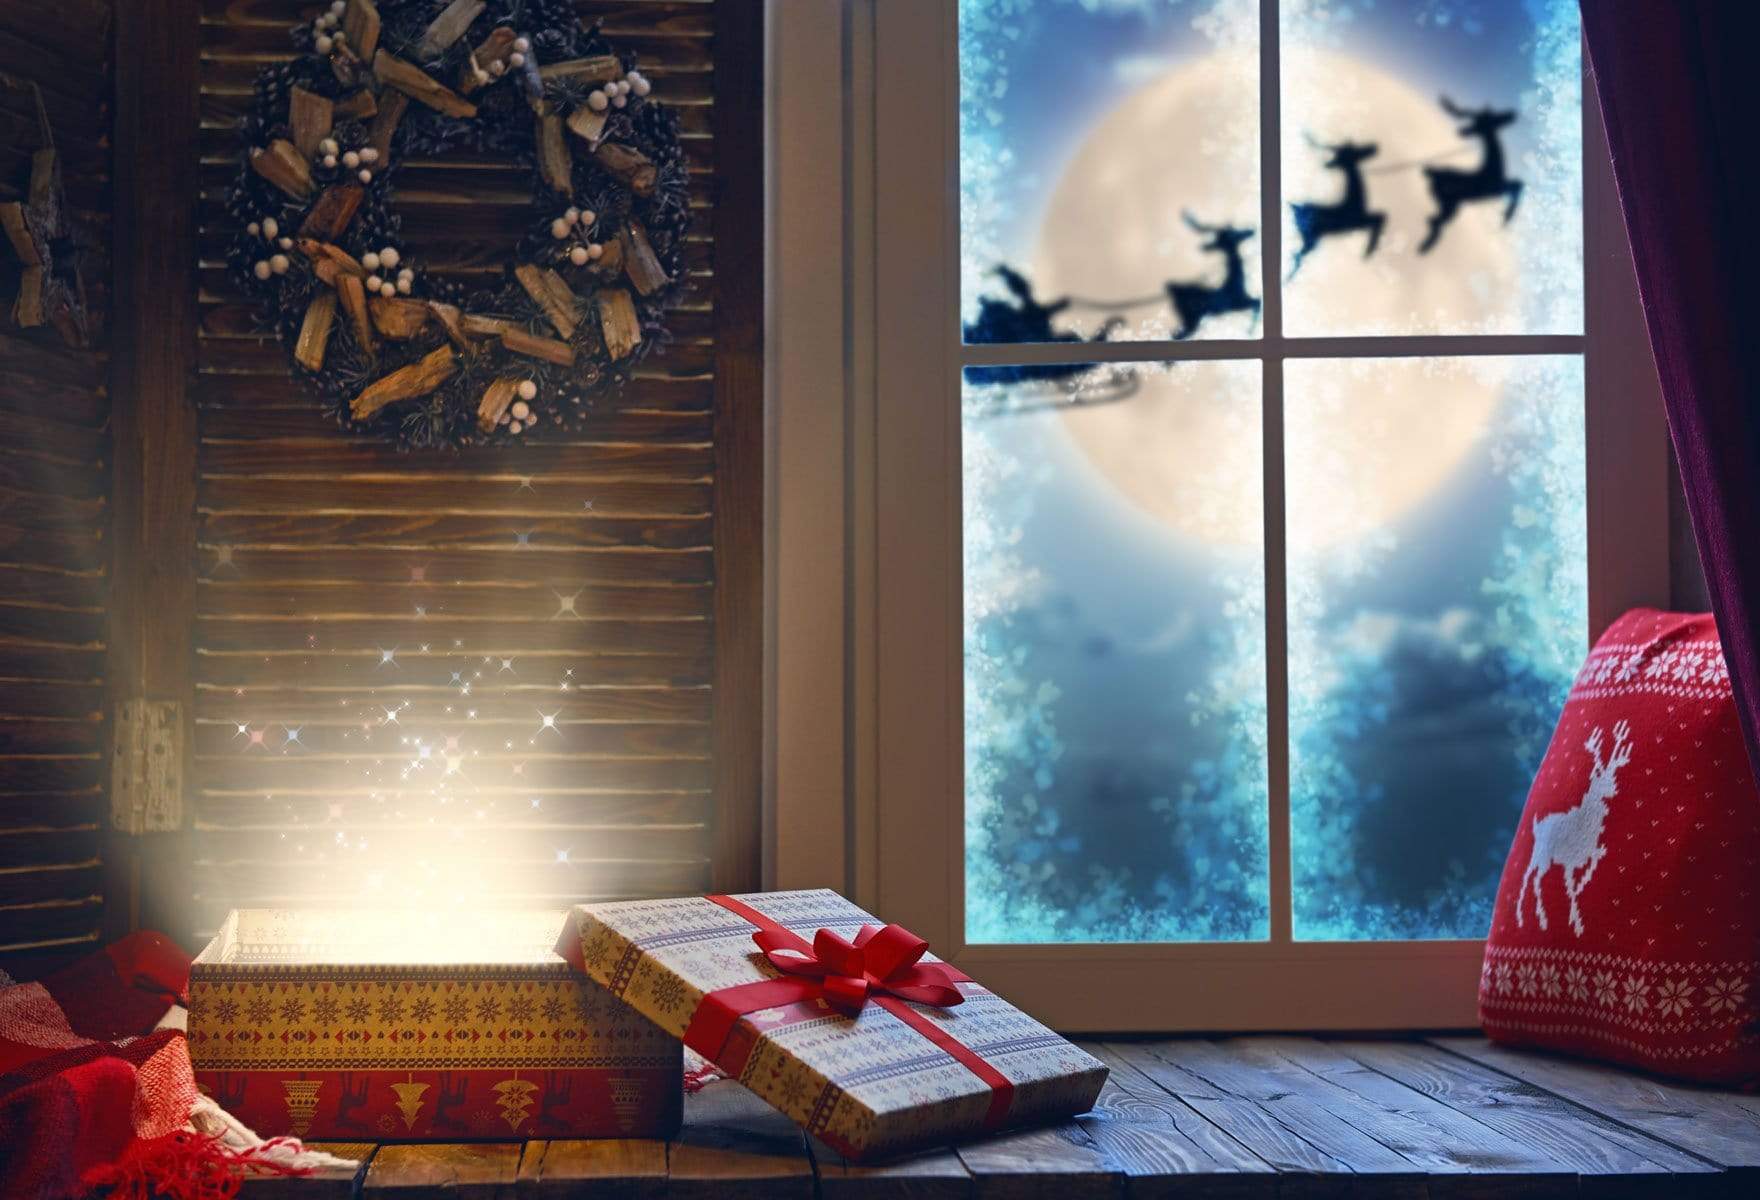 Katebackdrop£ºKate Christmas Moon And Reindeer Outside Window Backdrops for Photography